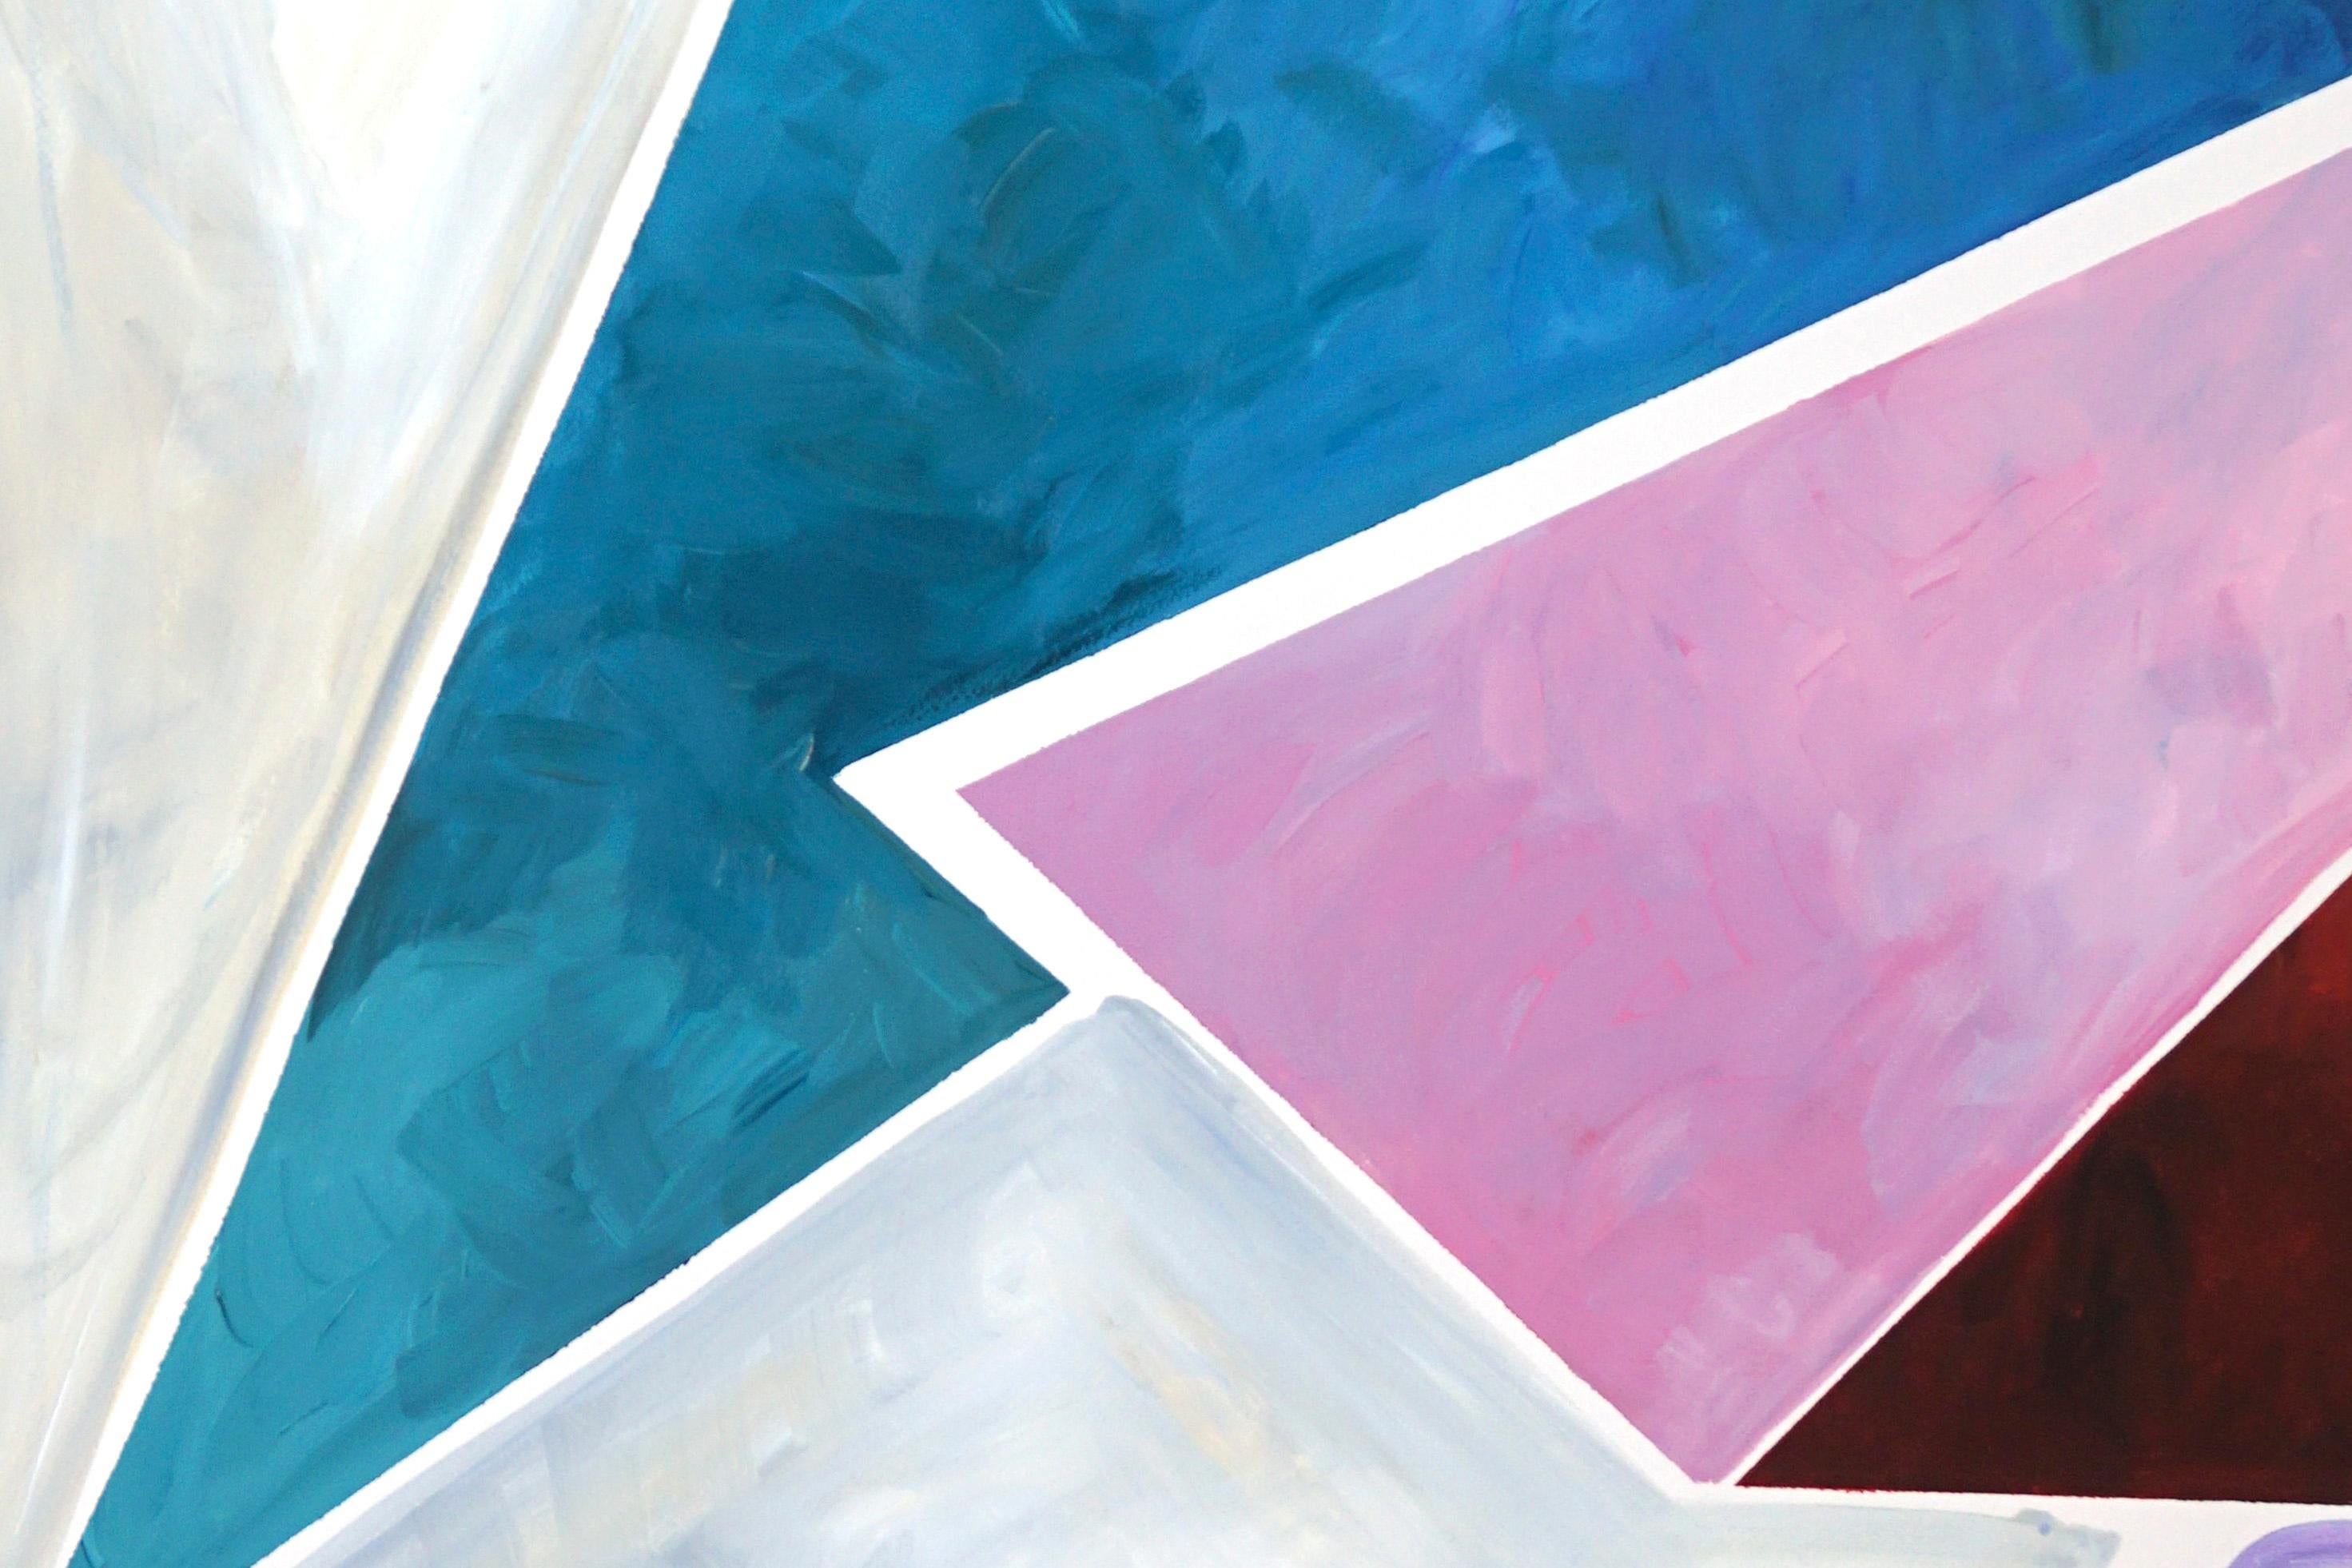 Retro Futuristic Angle Ensemble, Constructivist Painting Diptych in Pastel Tones 2